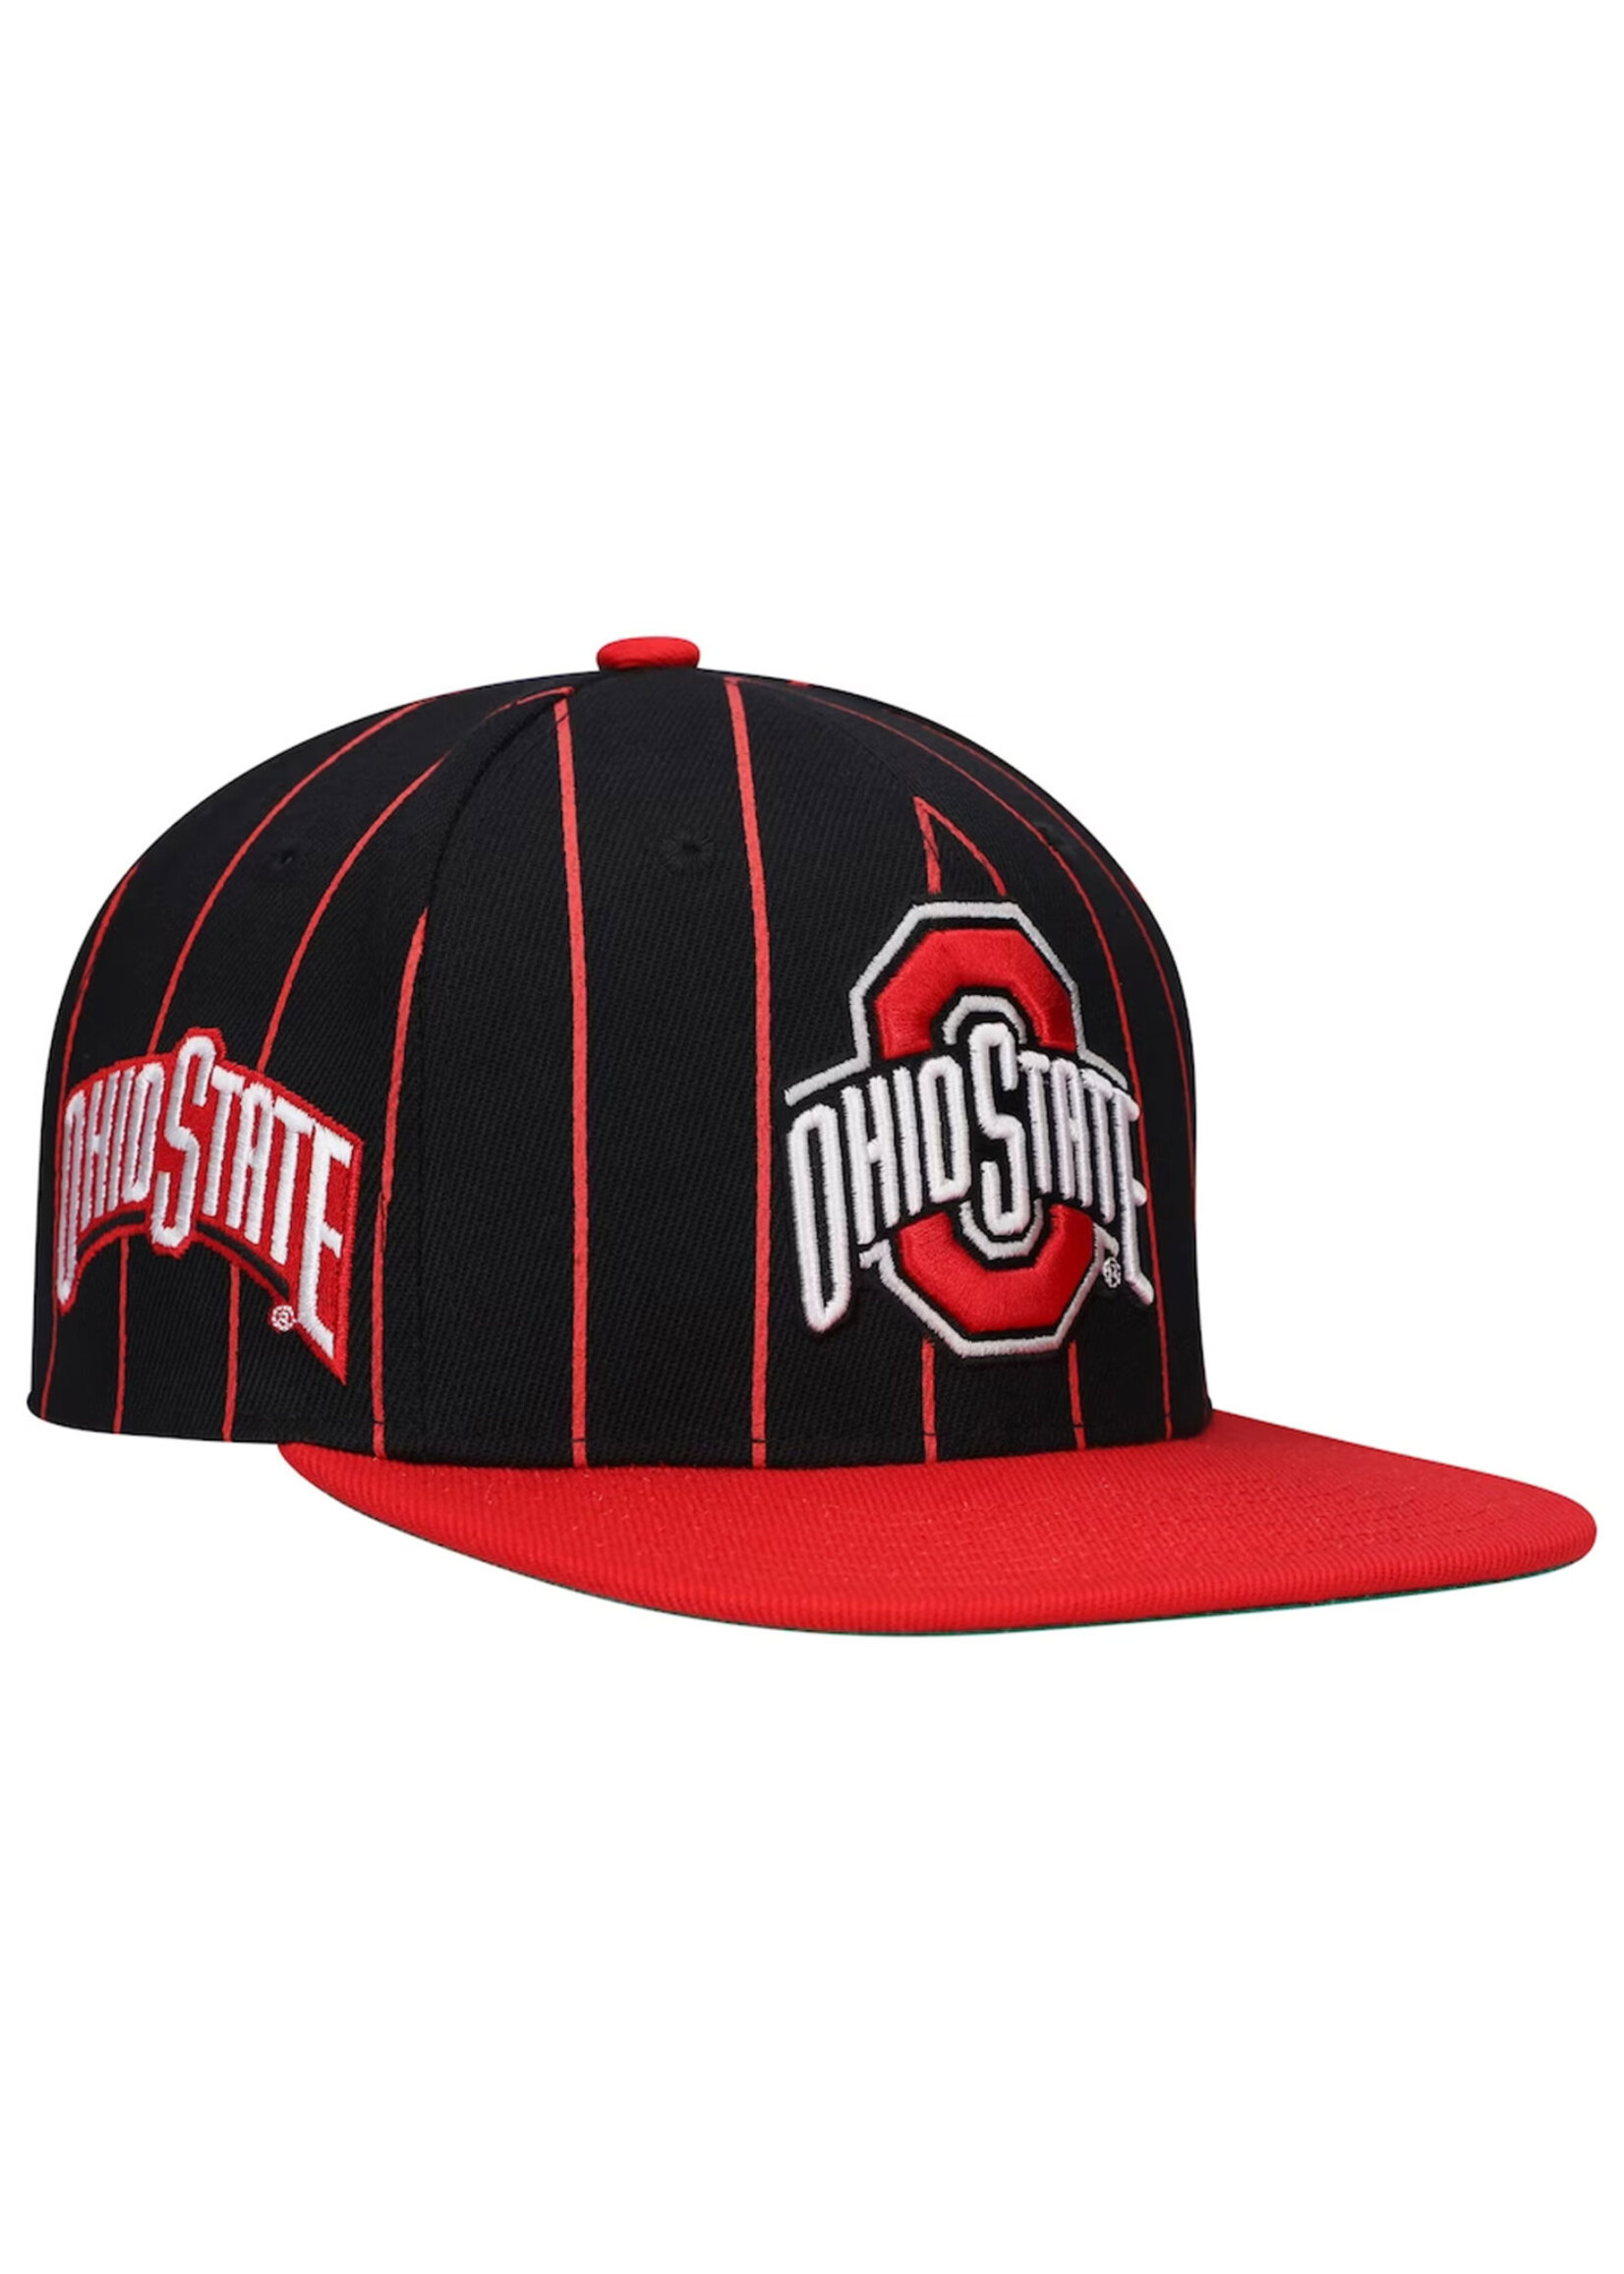 MITCHELL & NESS Ohio State Buckeyes Mitchell & Ness Team Pinstripe Snapback Hat